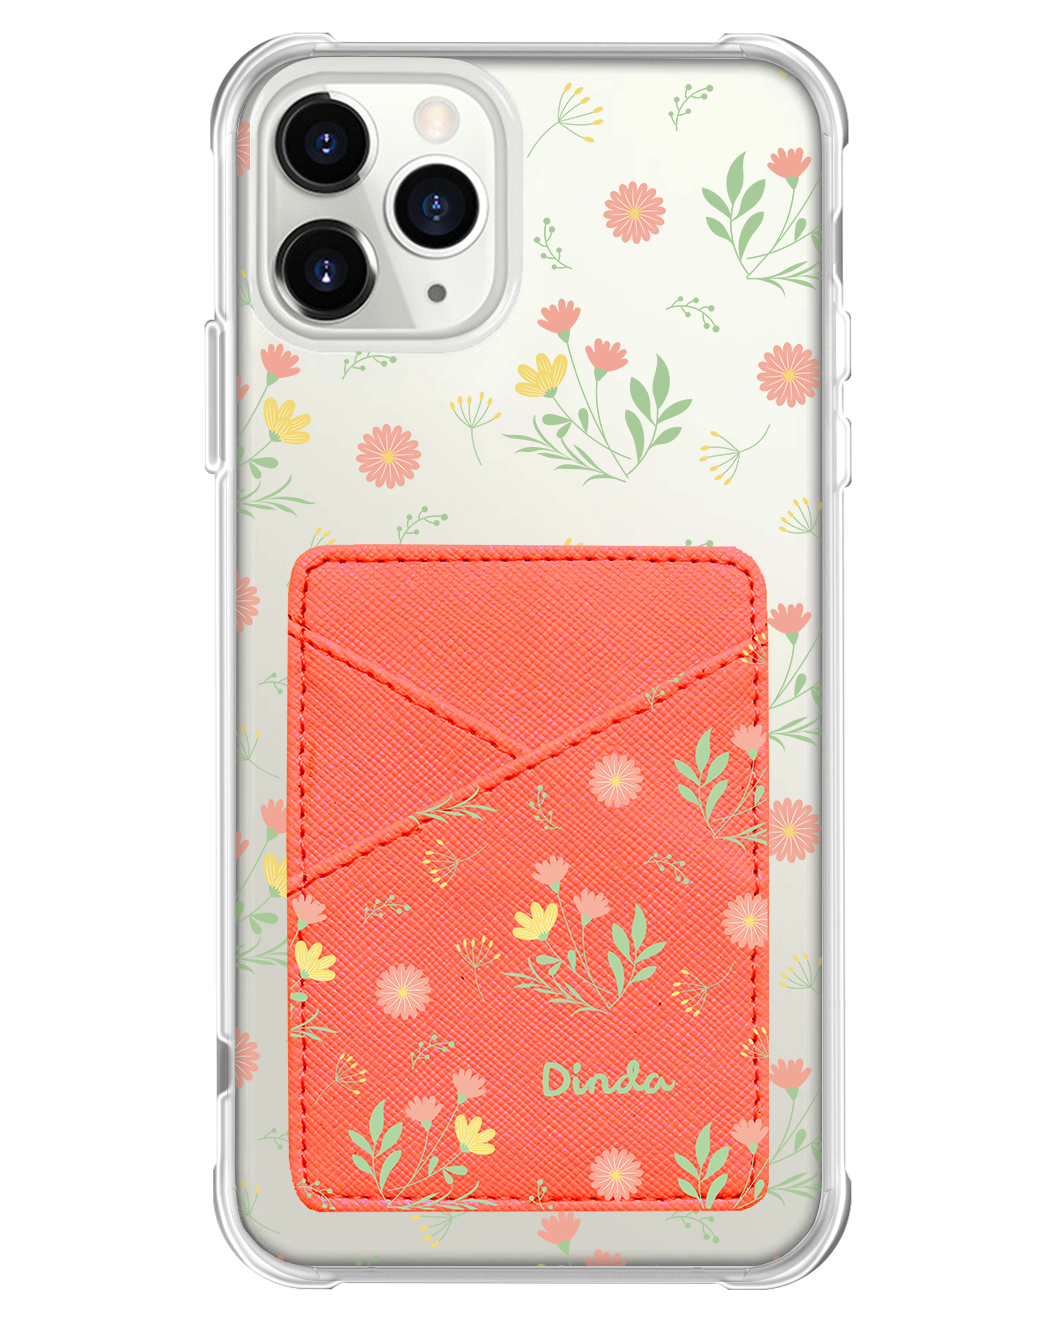 iPhone Phone Wallet Case - Dandelion